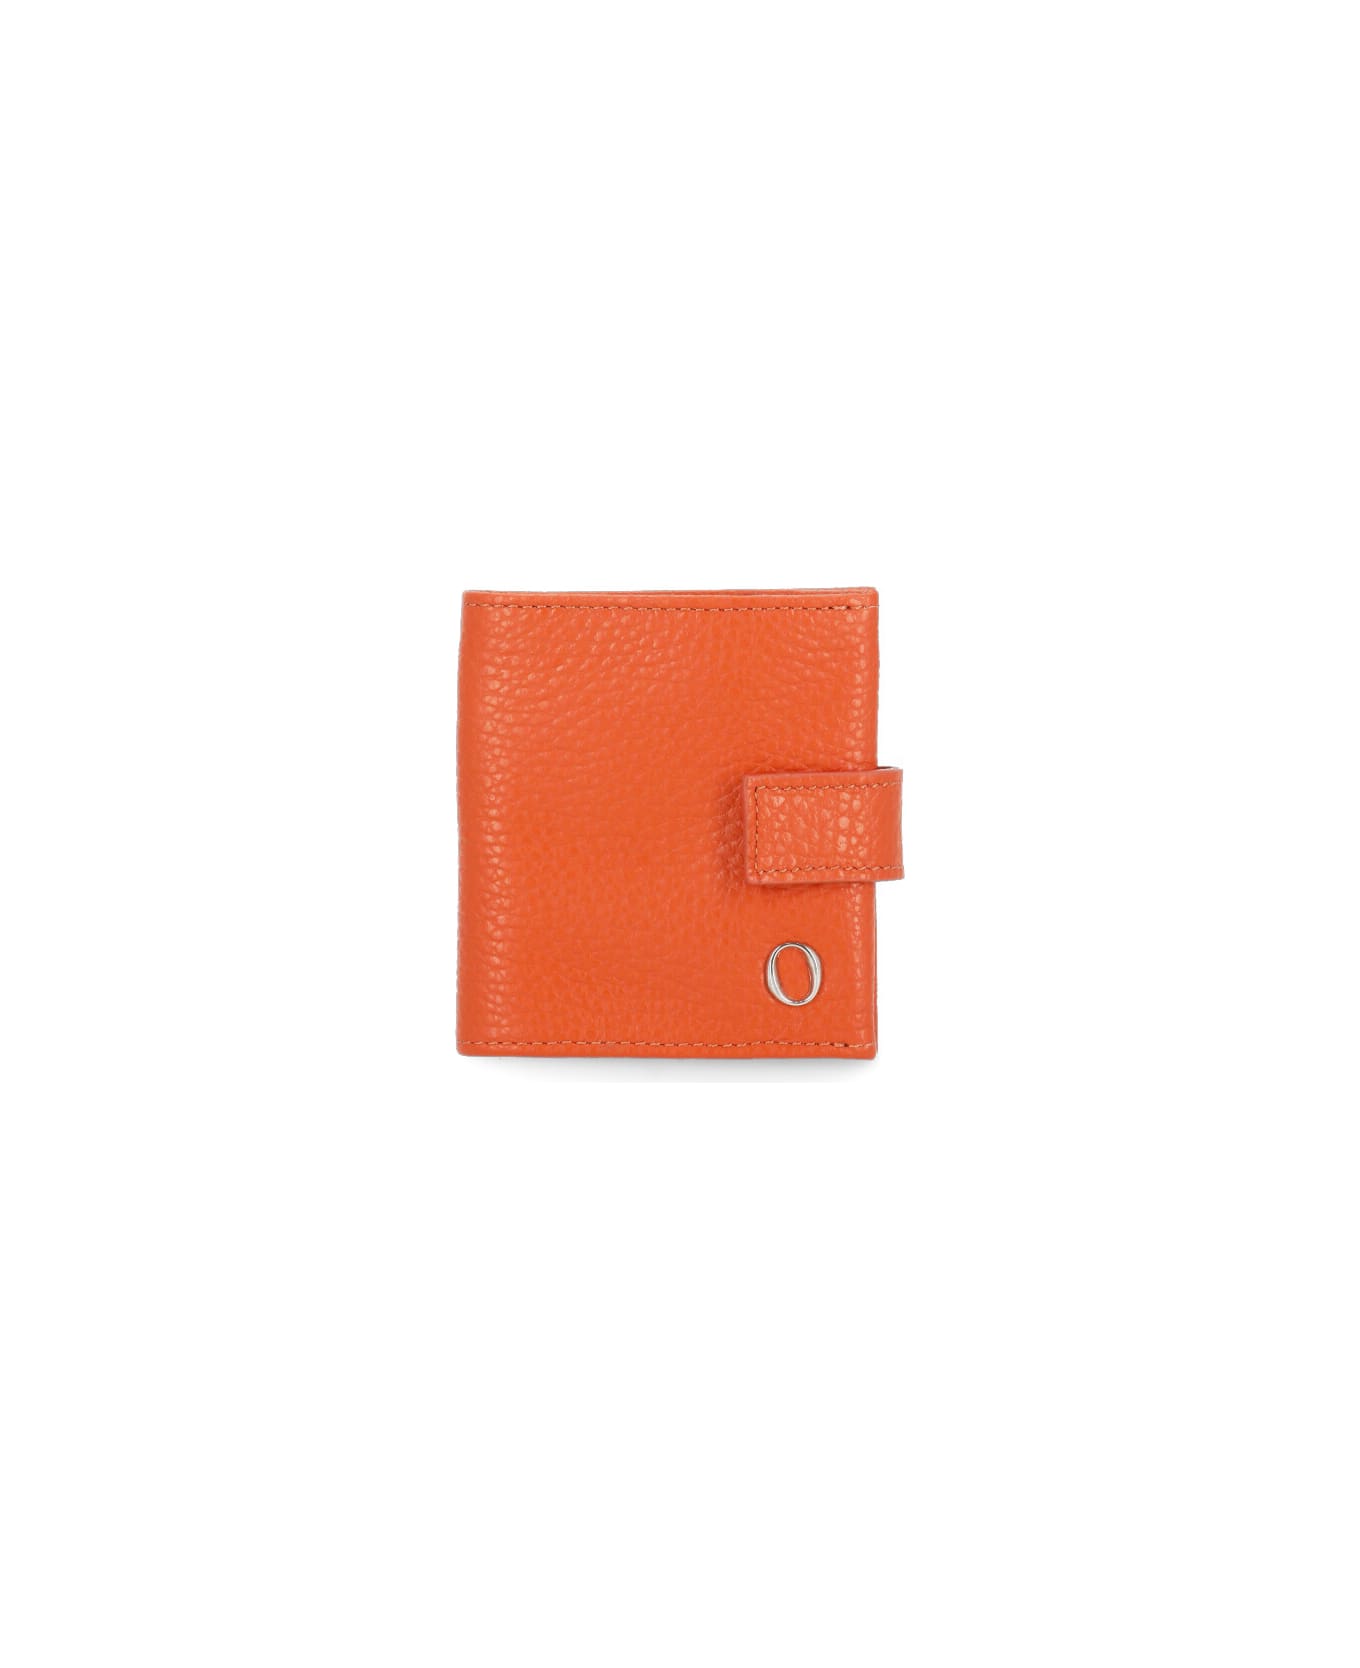 Orciani Micron Leather Purse - Orange